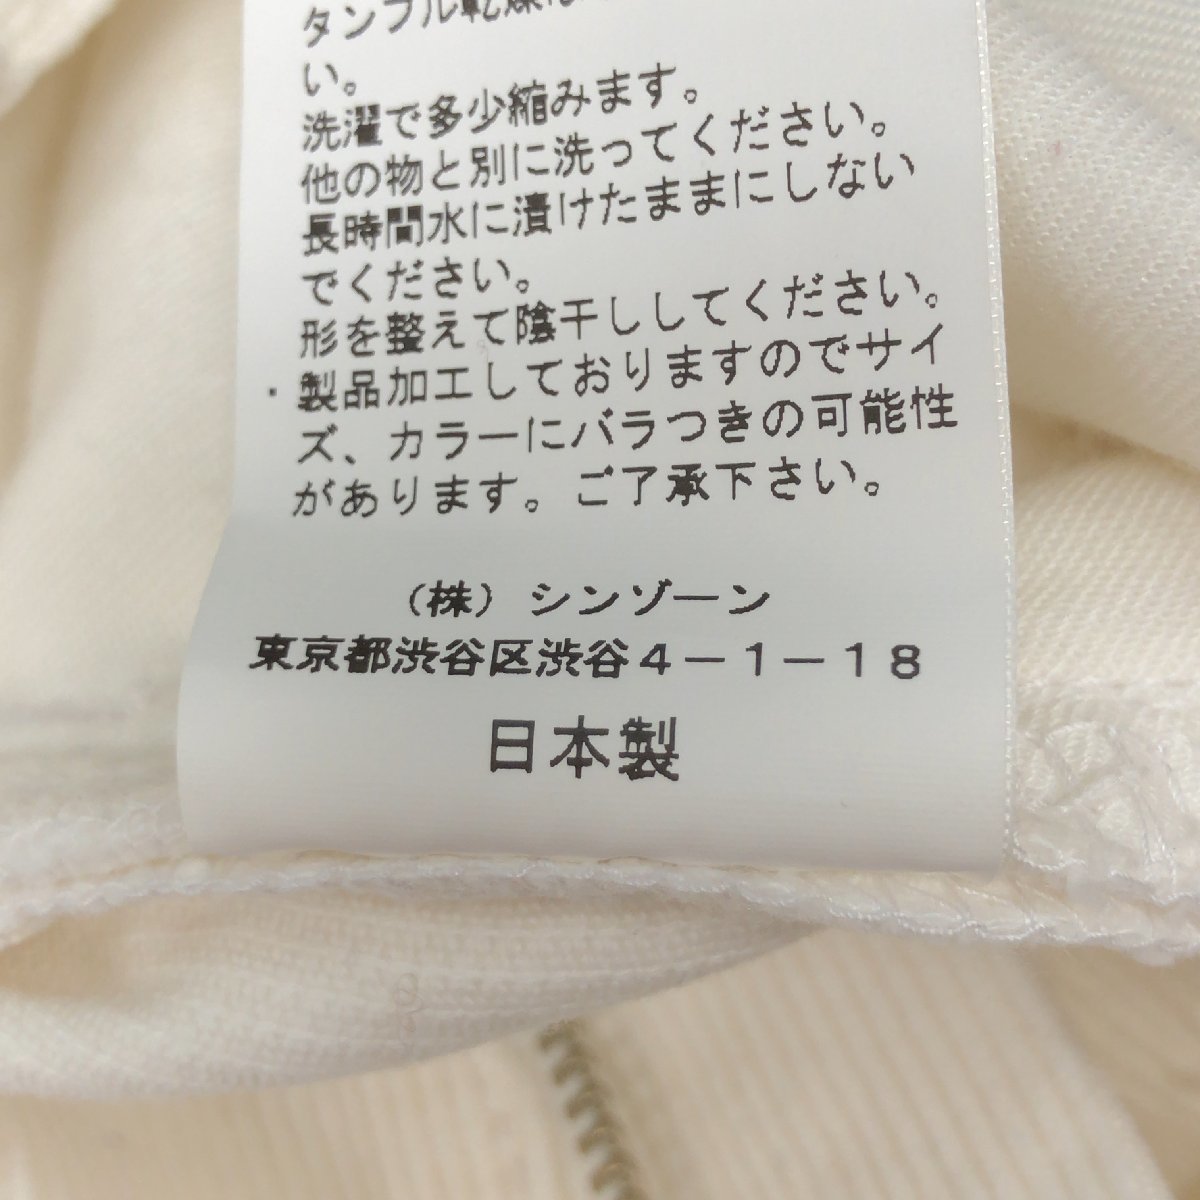 ●THE SHINZONE シンゾーン コーデュロイ パンツ 36(S) w68 白 ホワイト 日本製 白パン テーパード 国内正規品 レディース 女性用_画像8